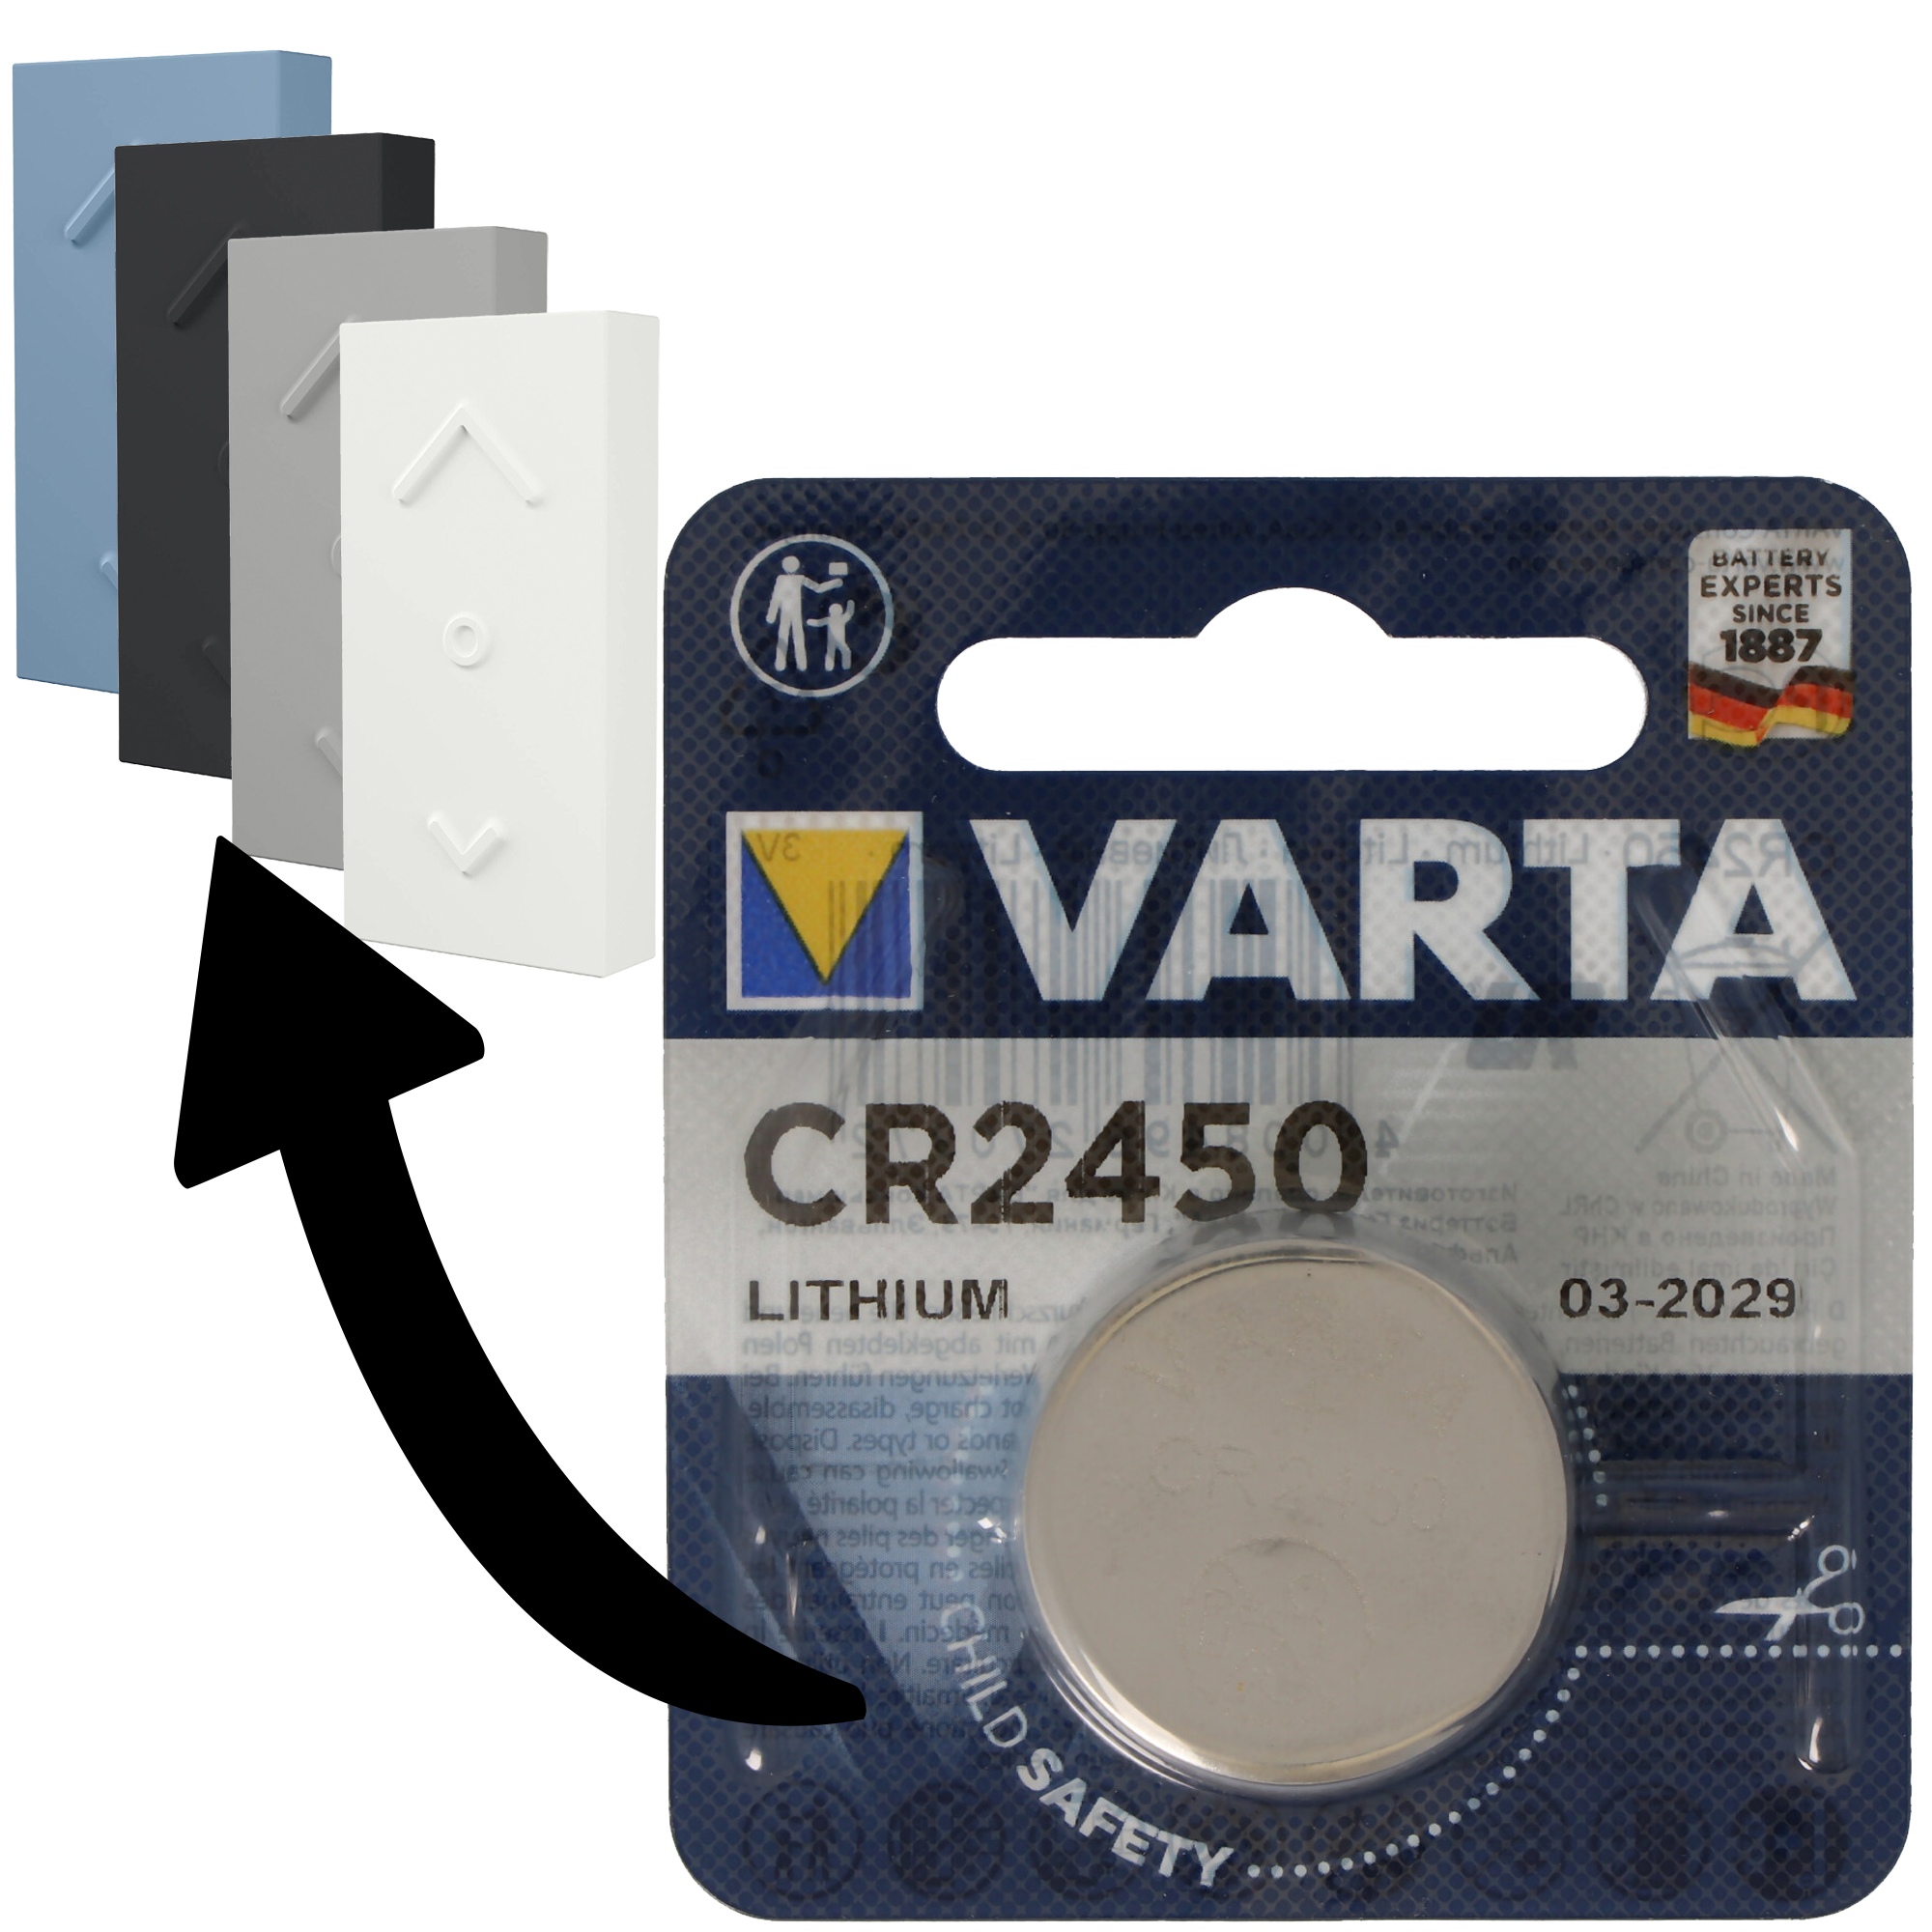 Batterie passend für Osram Lightify Mini Switch Dimmschalter 1x Varta CR2450 Lithium Batterie IEC CR 2450